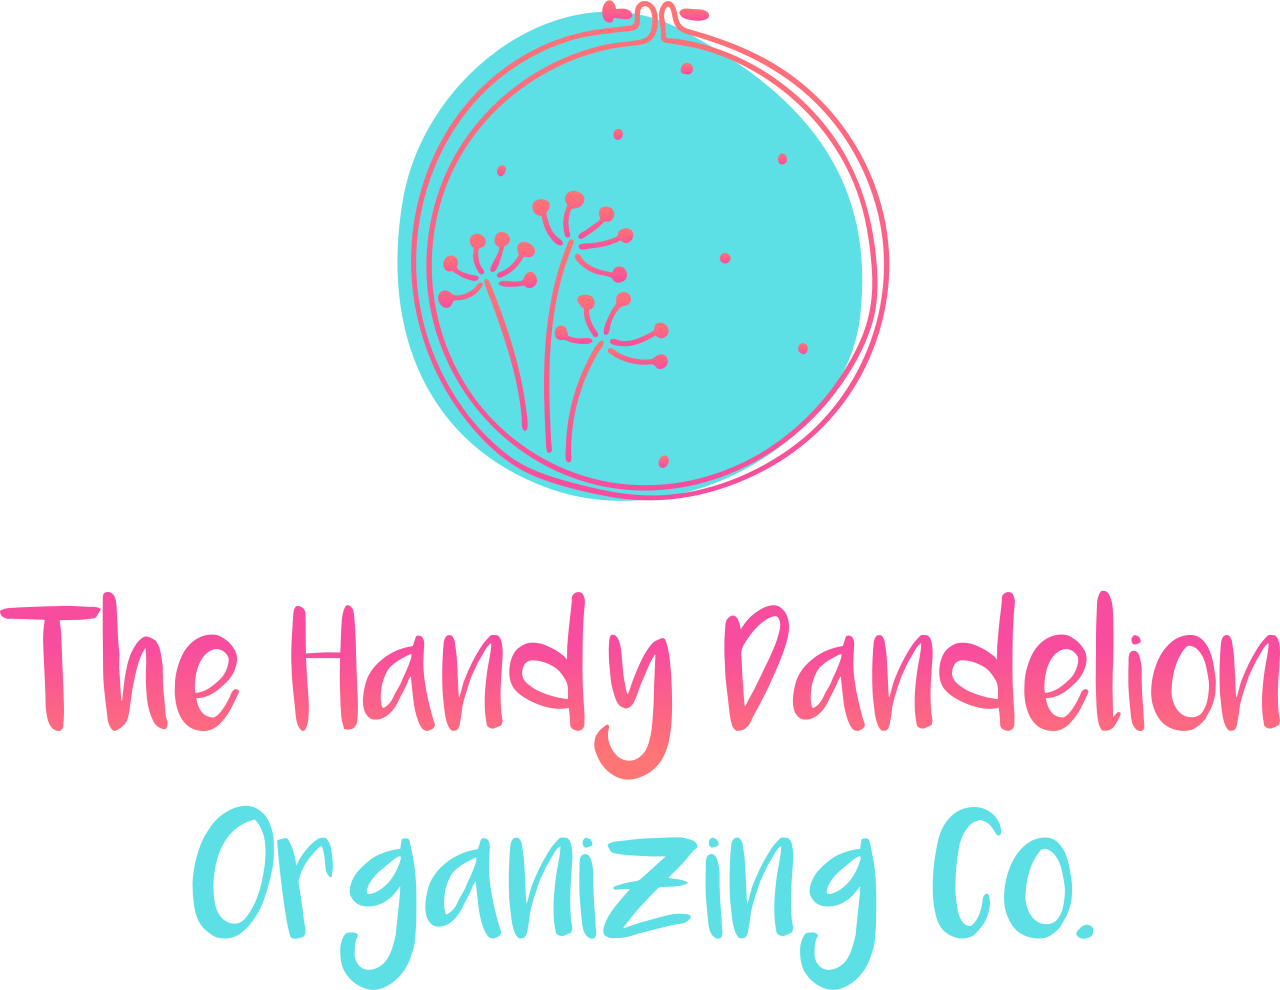 The Handy Dandelion Organizing Co.'s logo